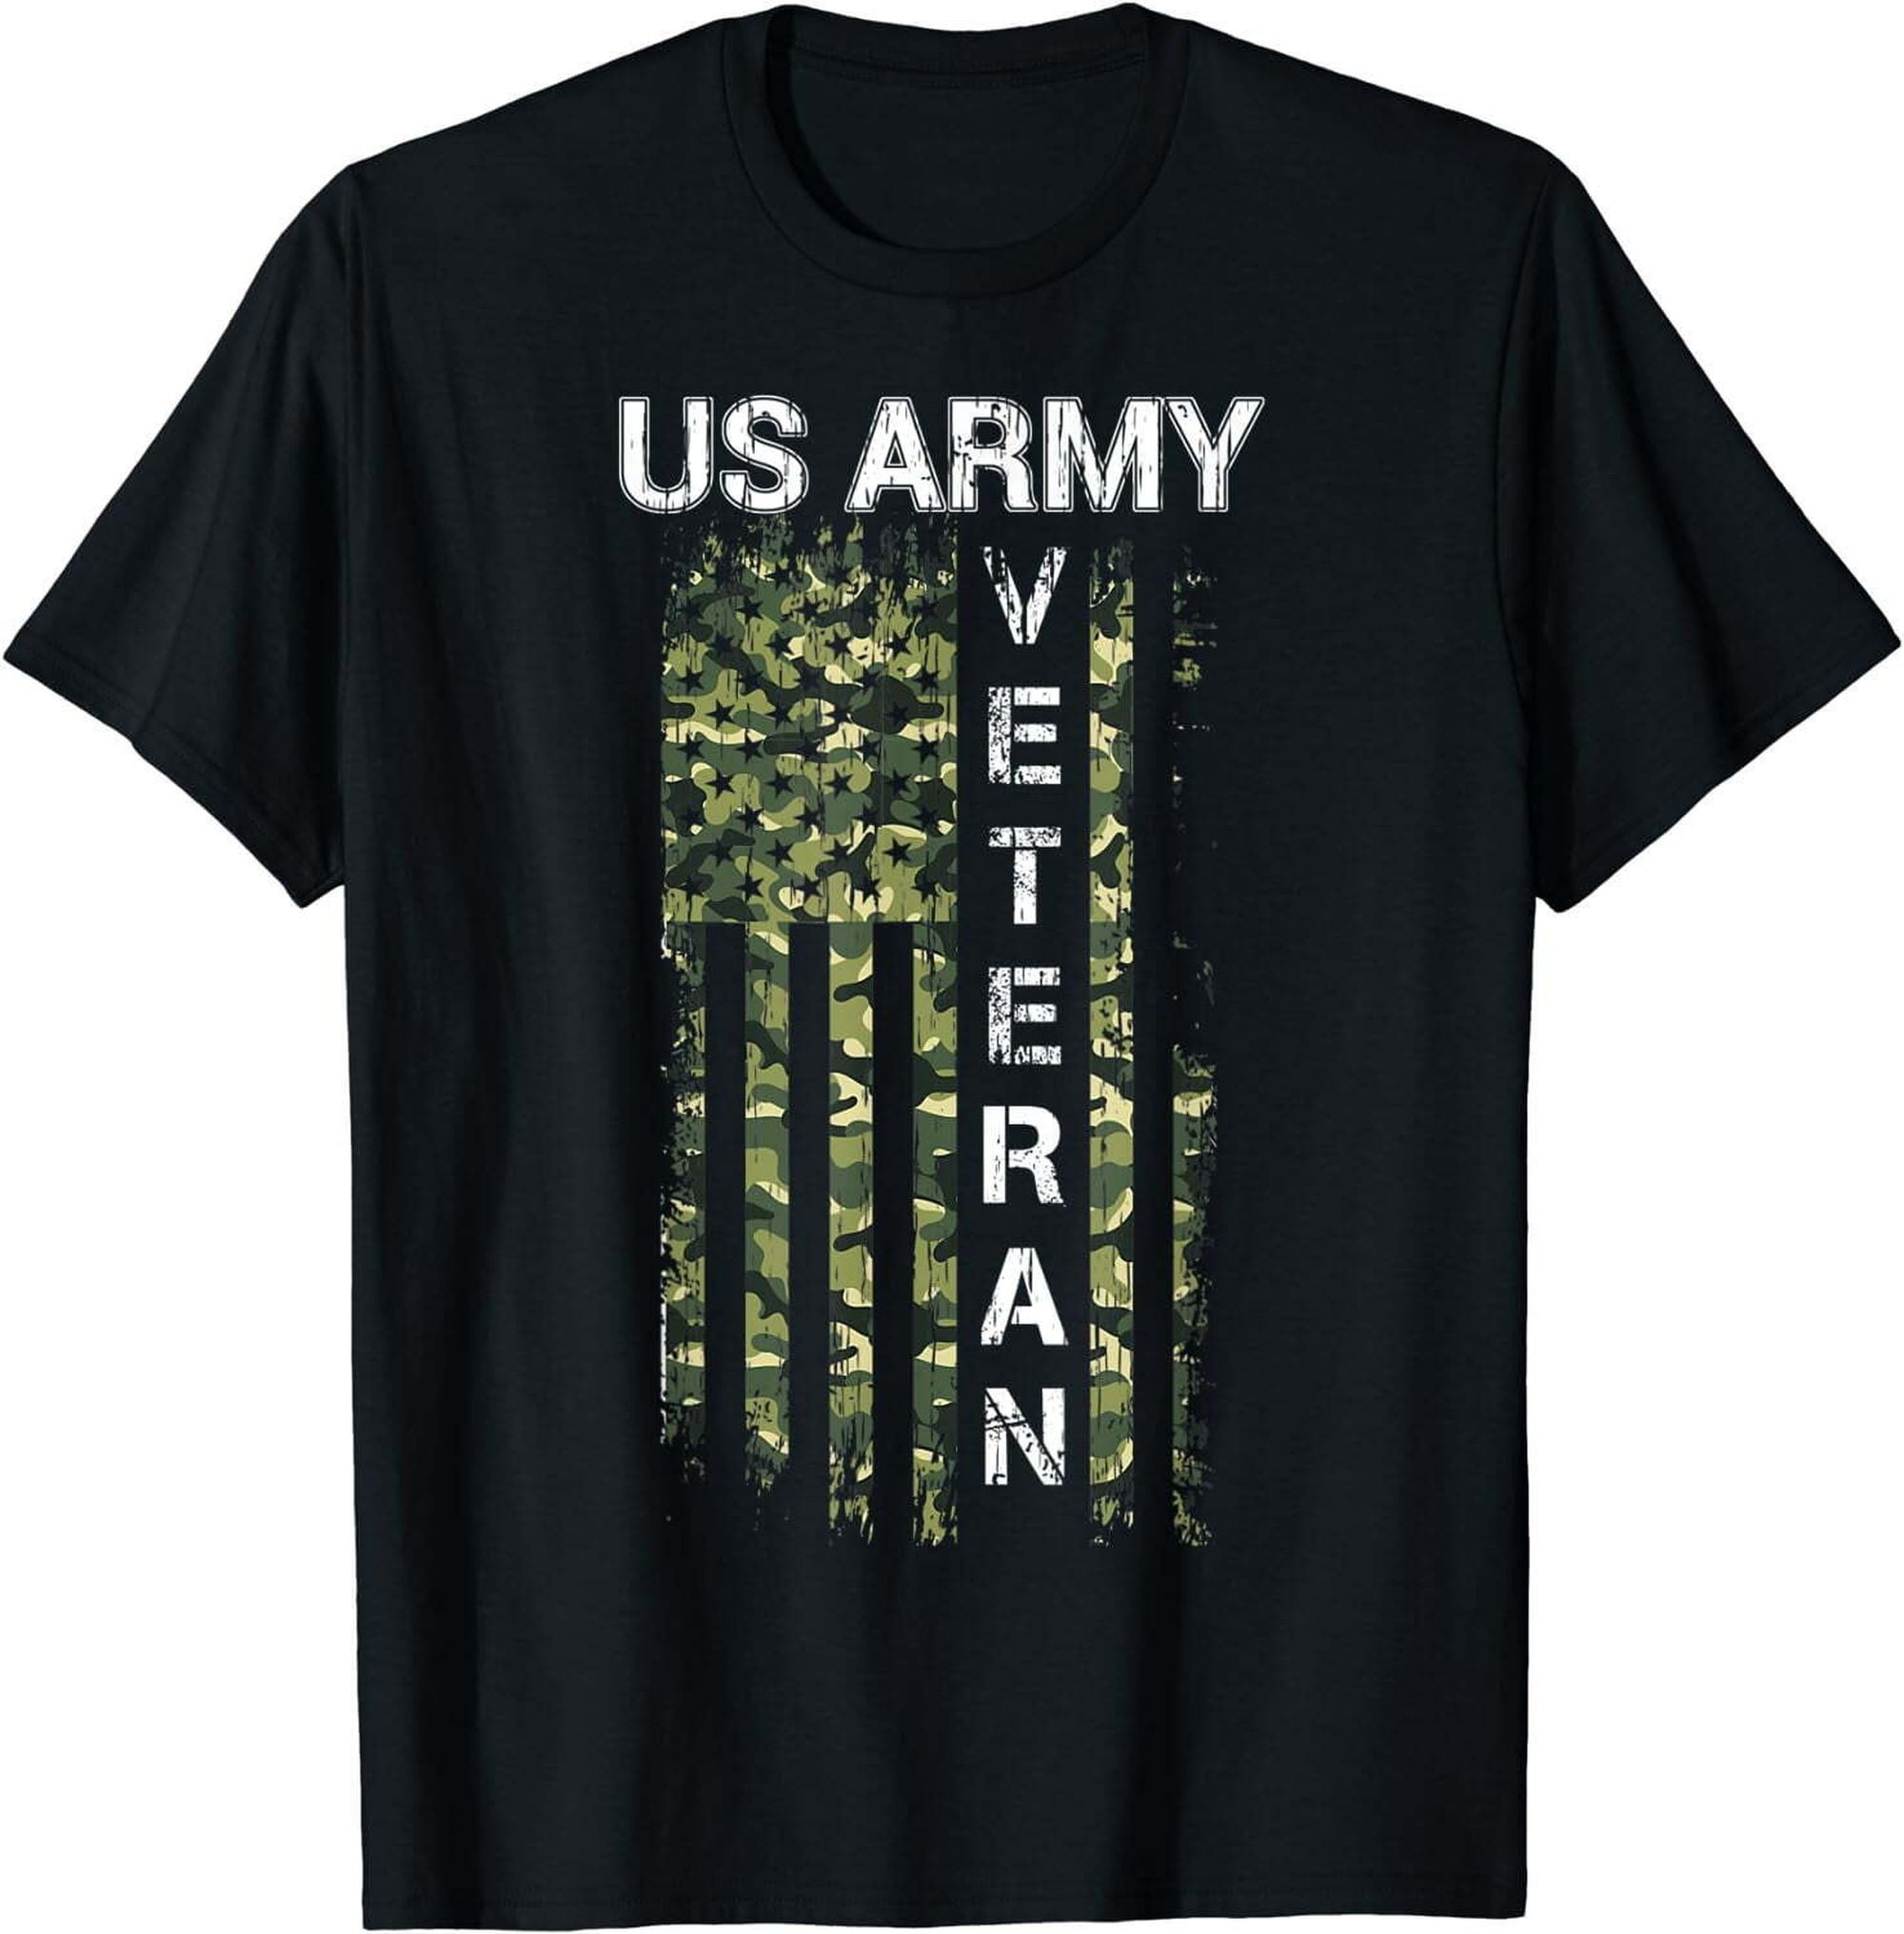 Army Veteran Shirt For Men - US Army Veteran T-Shirt - Walmart.com